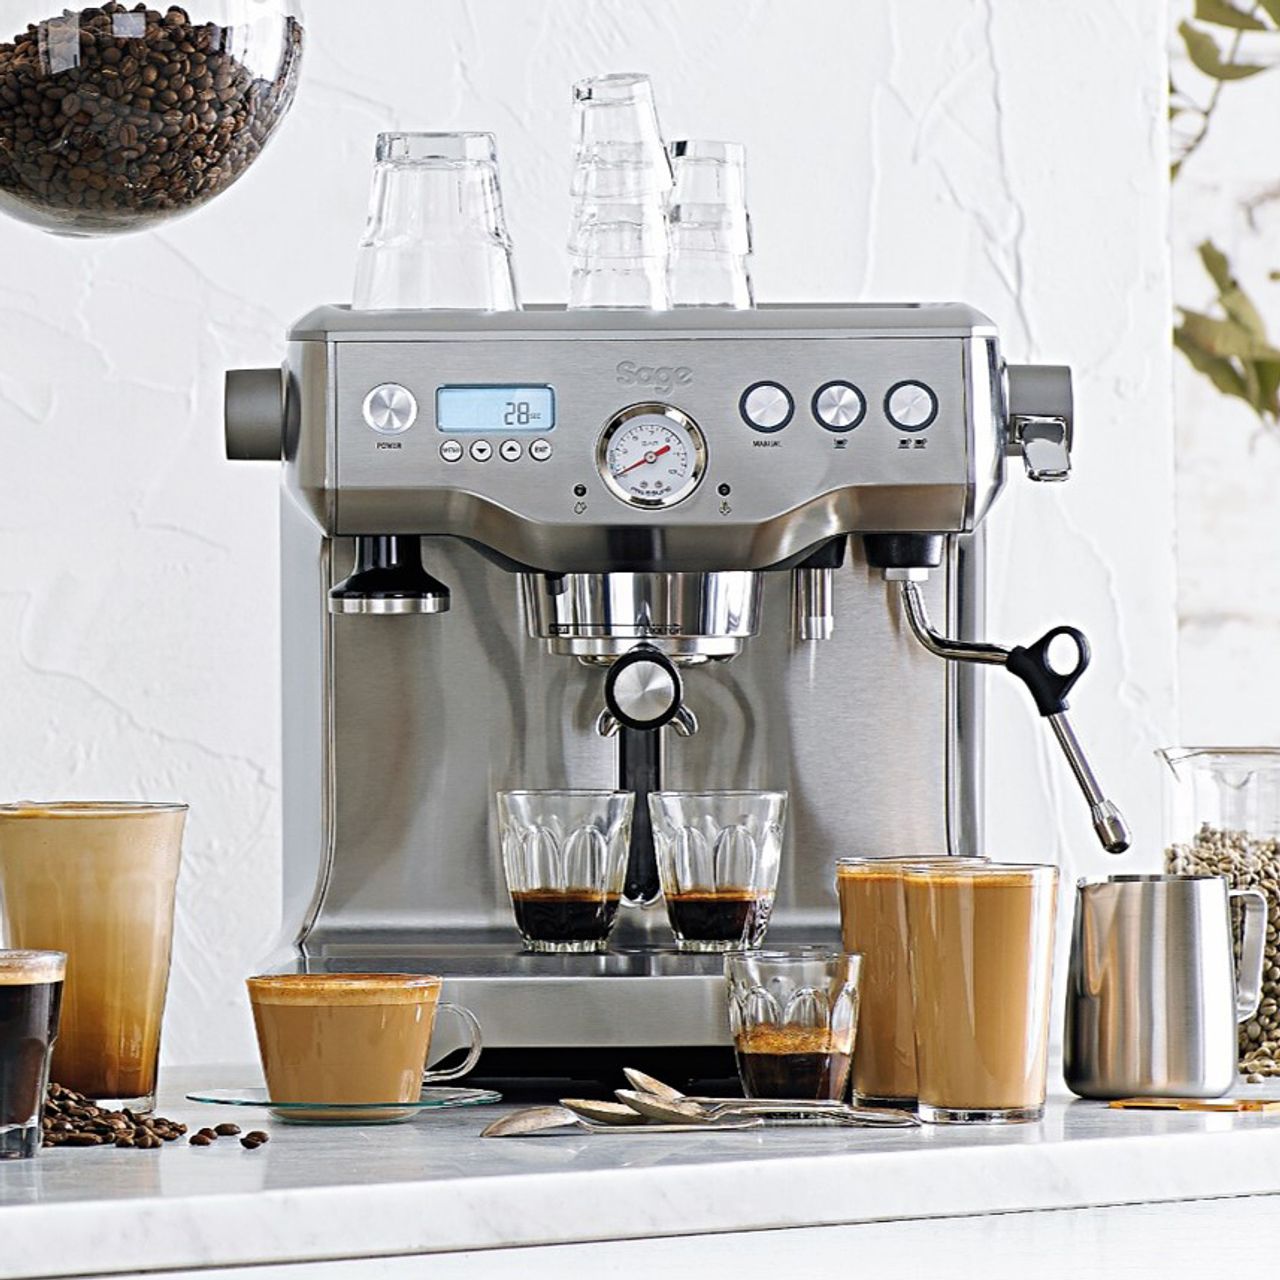 Sage The Dual Boiler BES920UK Espresso Coffee Machine specs